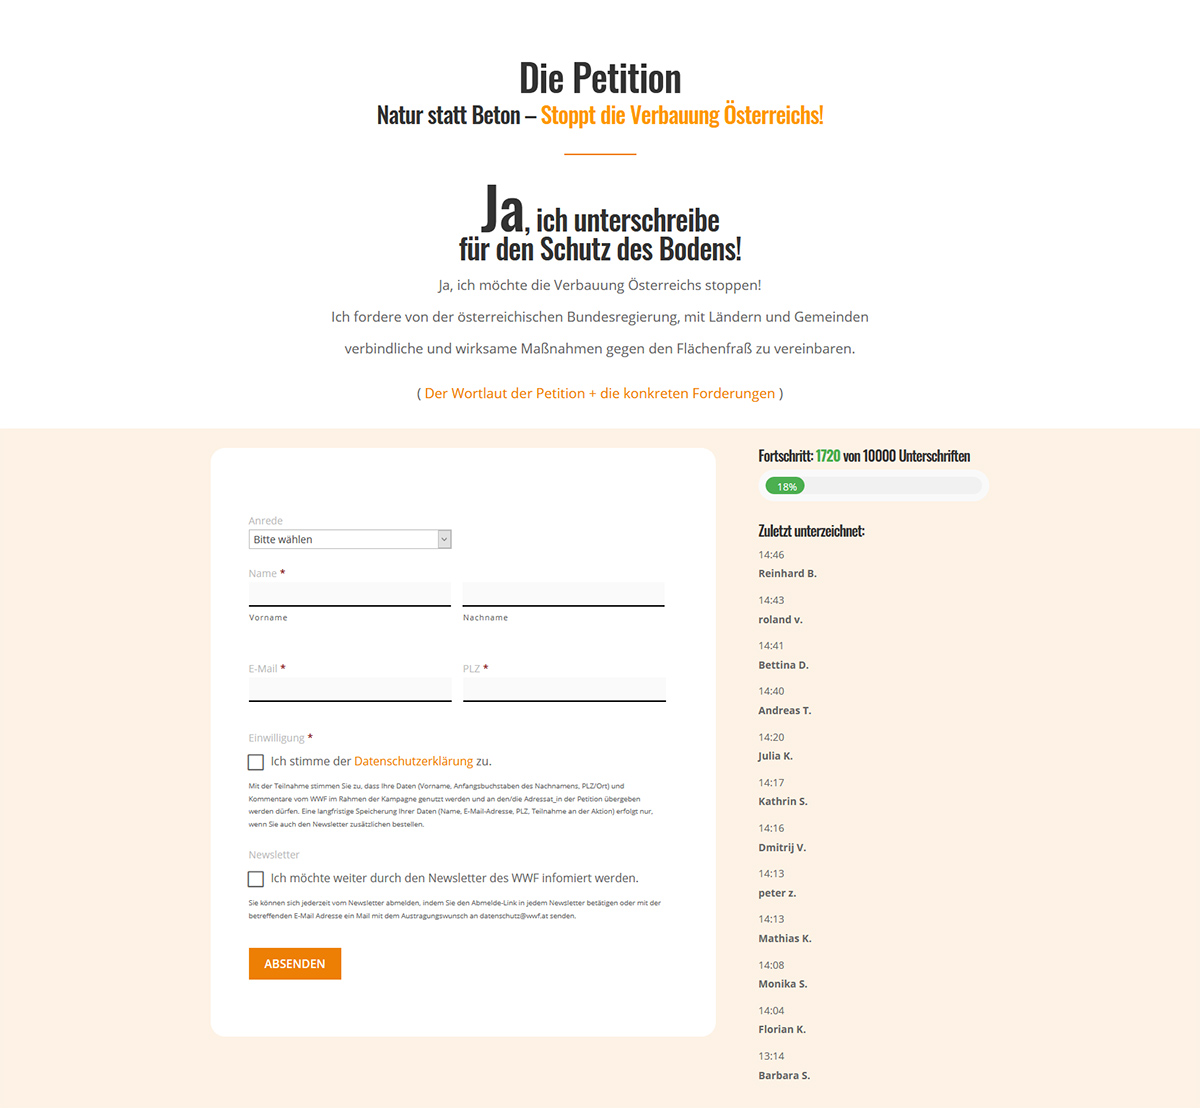 wwf-natur-statt-beton-online-kampagne-petition-agentur-iservice